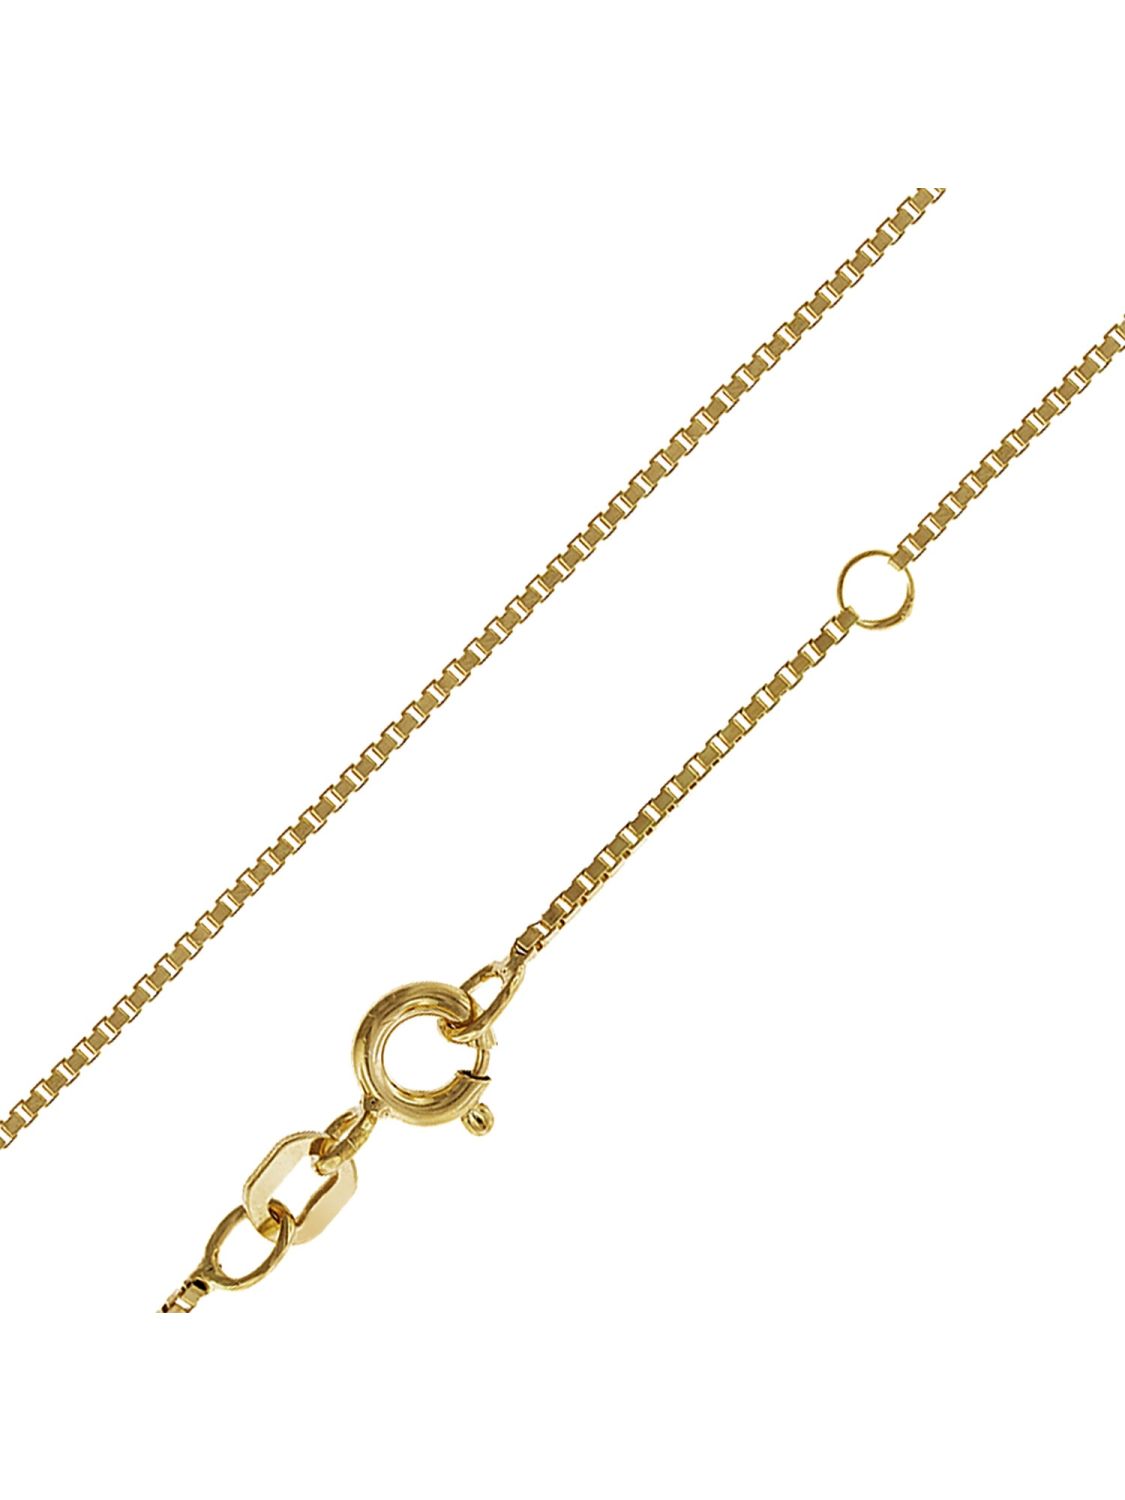 Acalee Peridot Anhänger Gold 333 / 8K + Halskette 80-1005-04 • uhrcenter